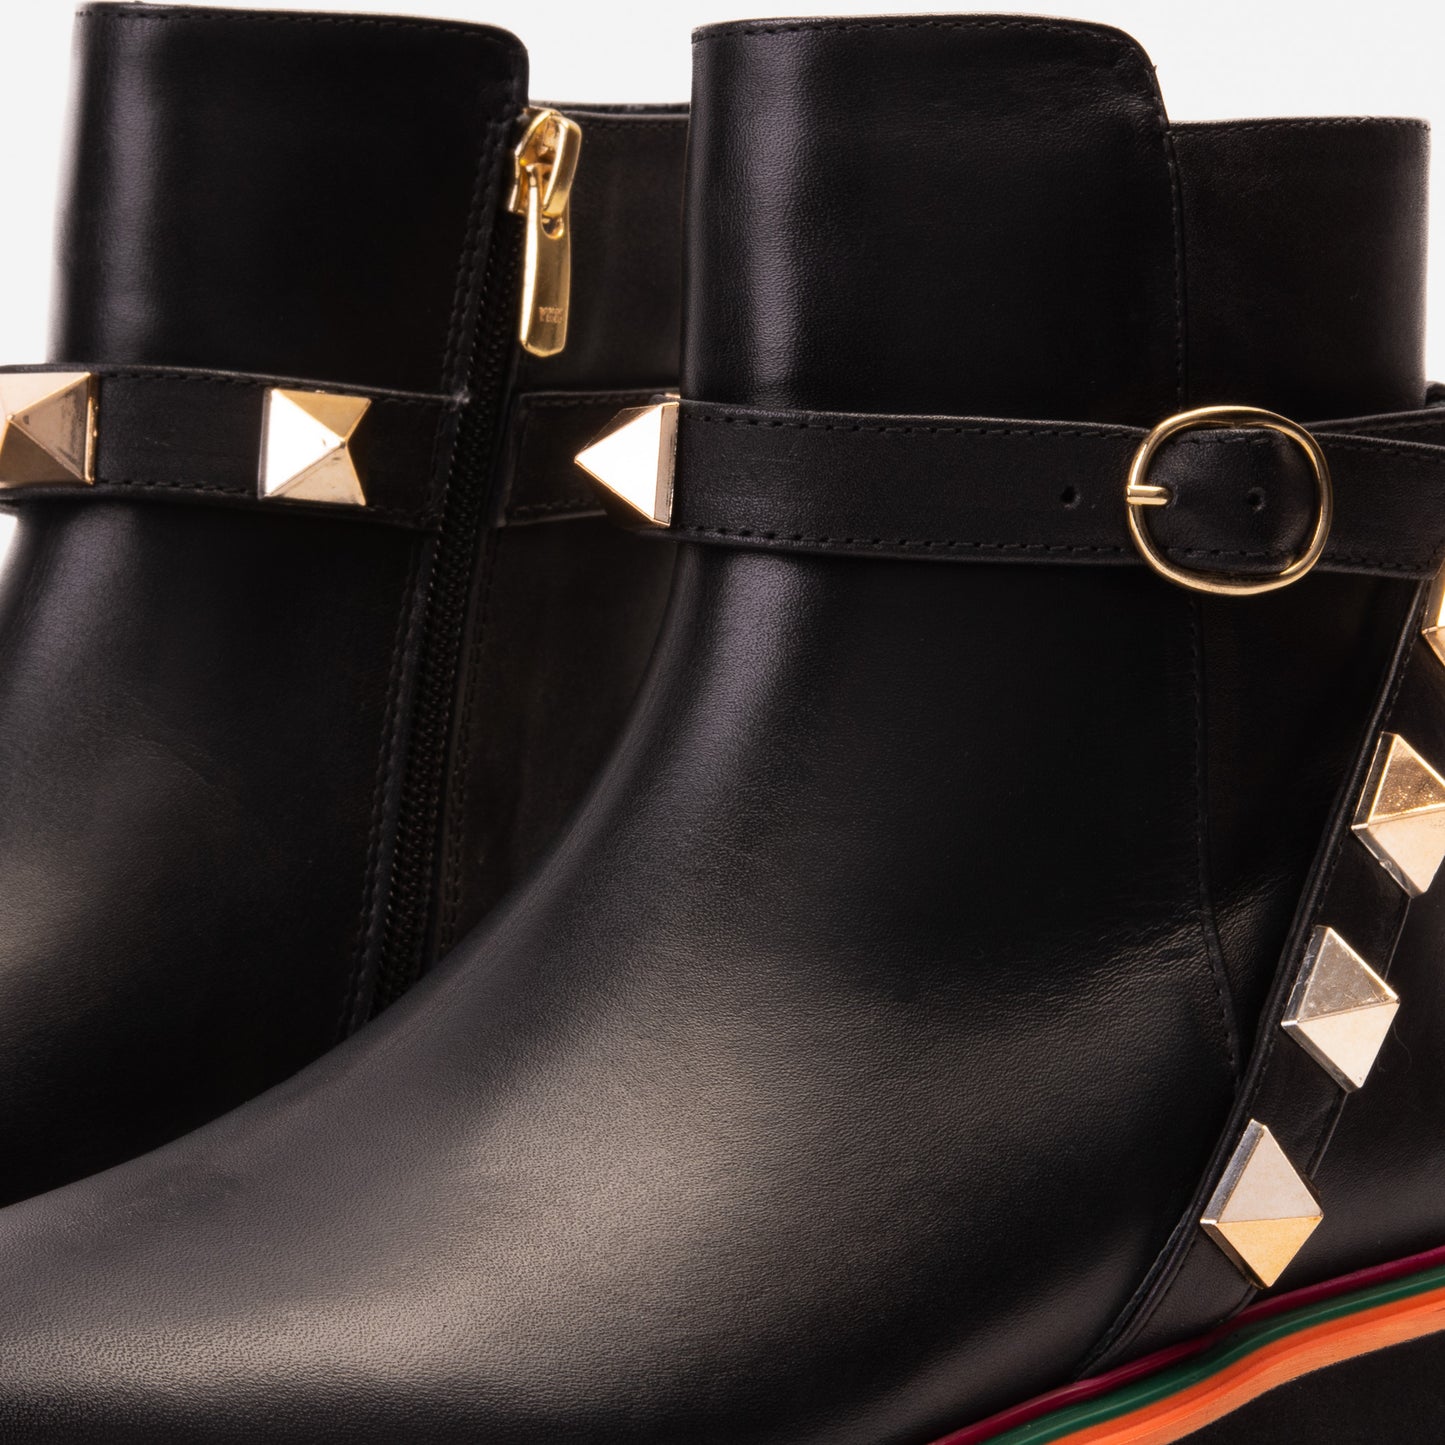 The Prag Black Leather Ankle Women Boot